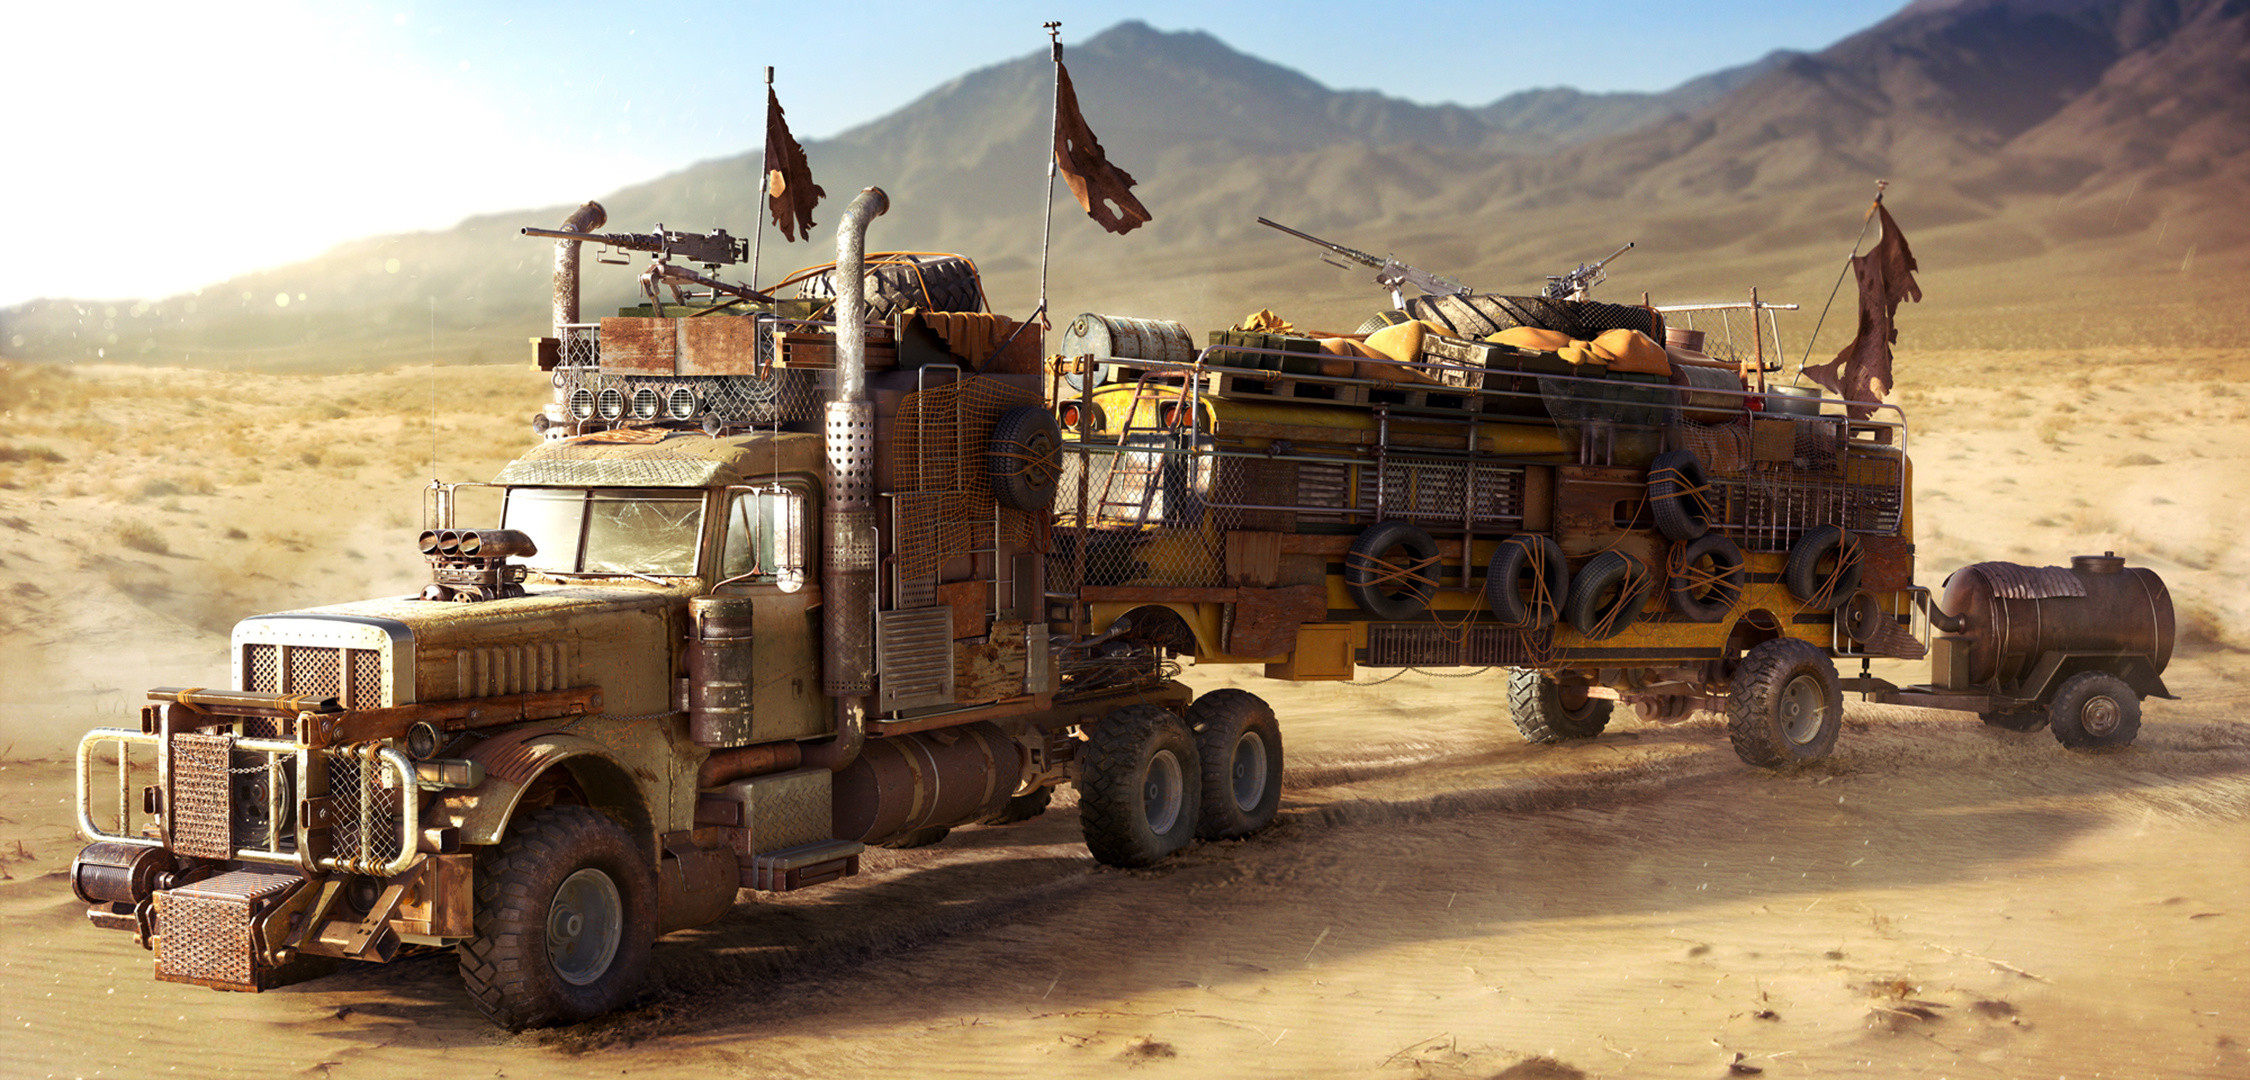 2250x1080 fallout, school bus, truck, wasteland, desert, postapocalyptic, desert, bus